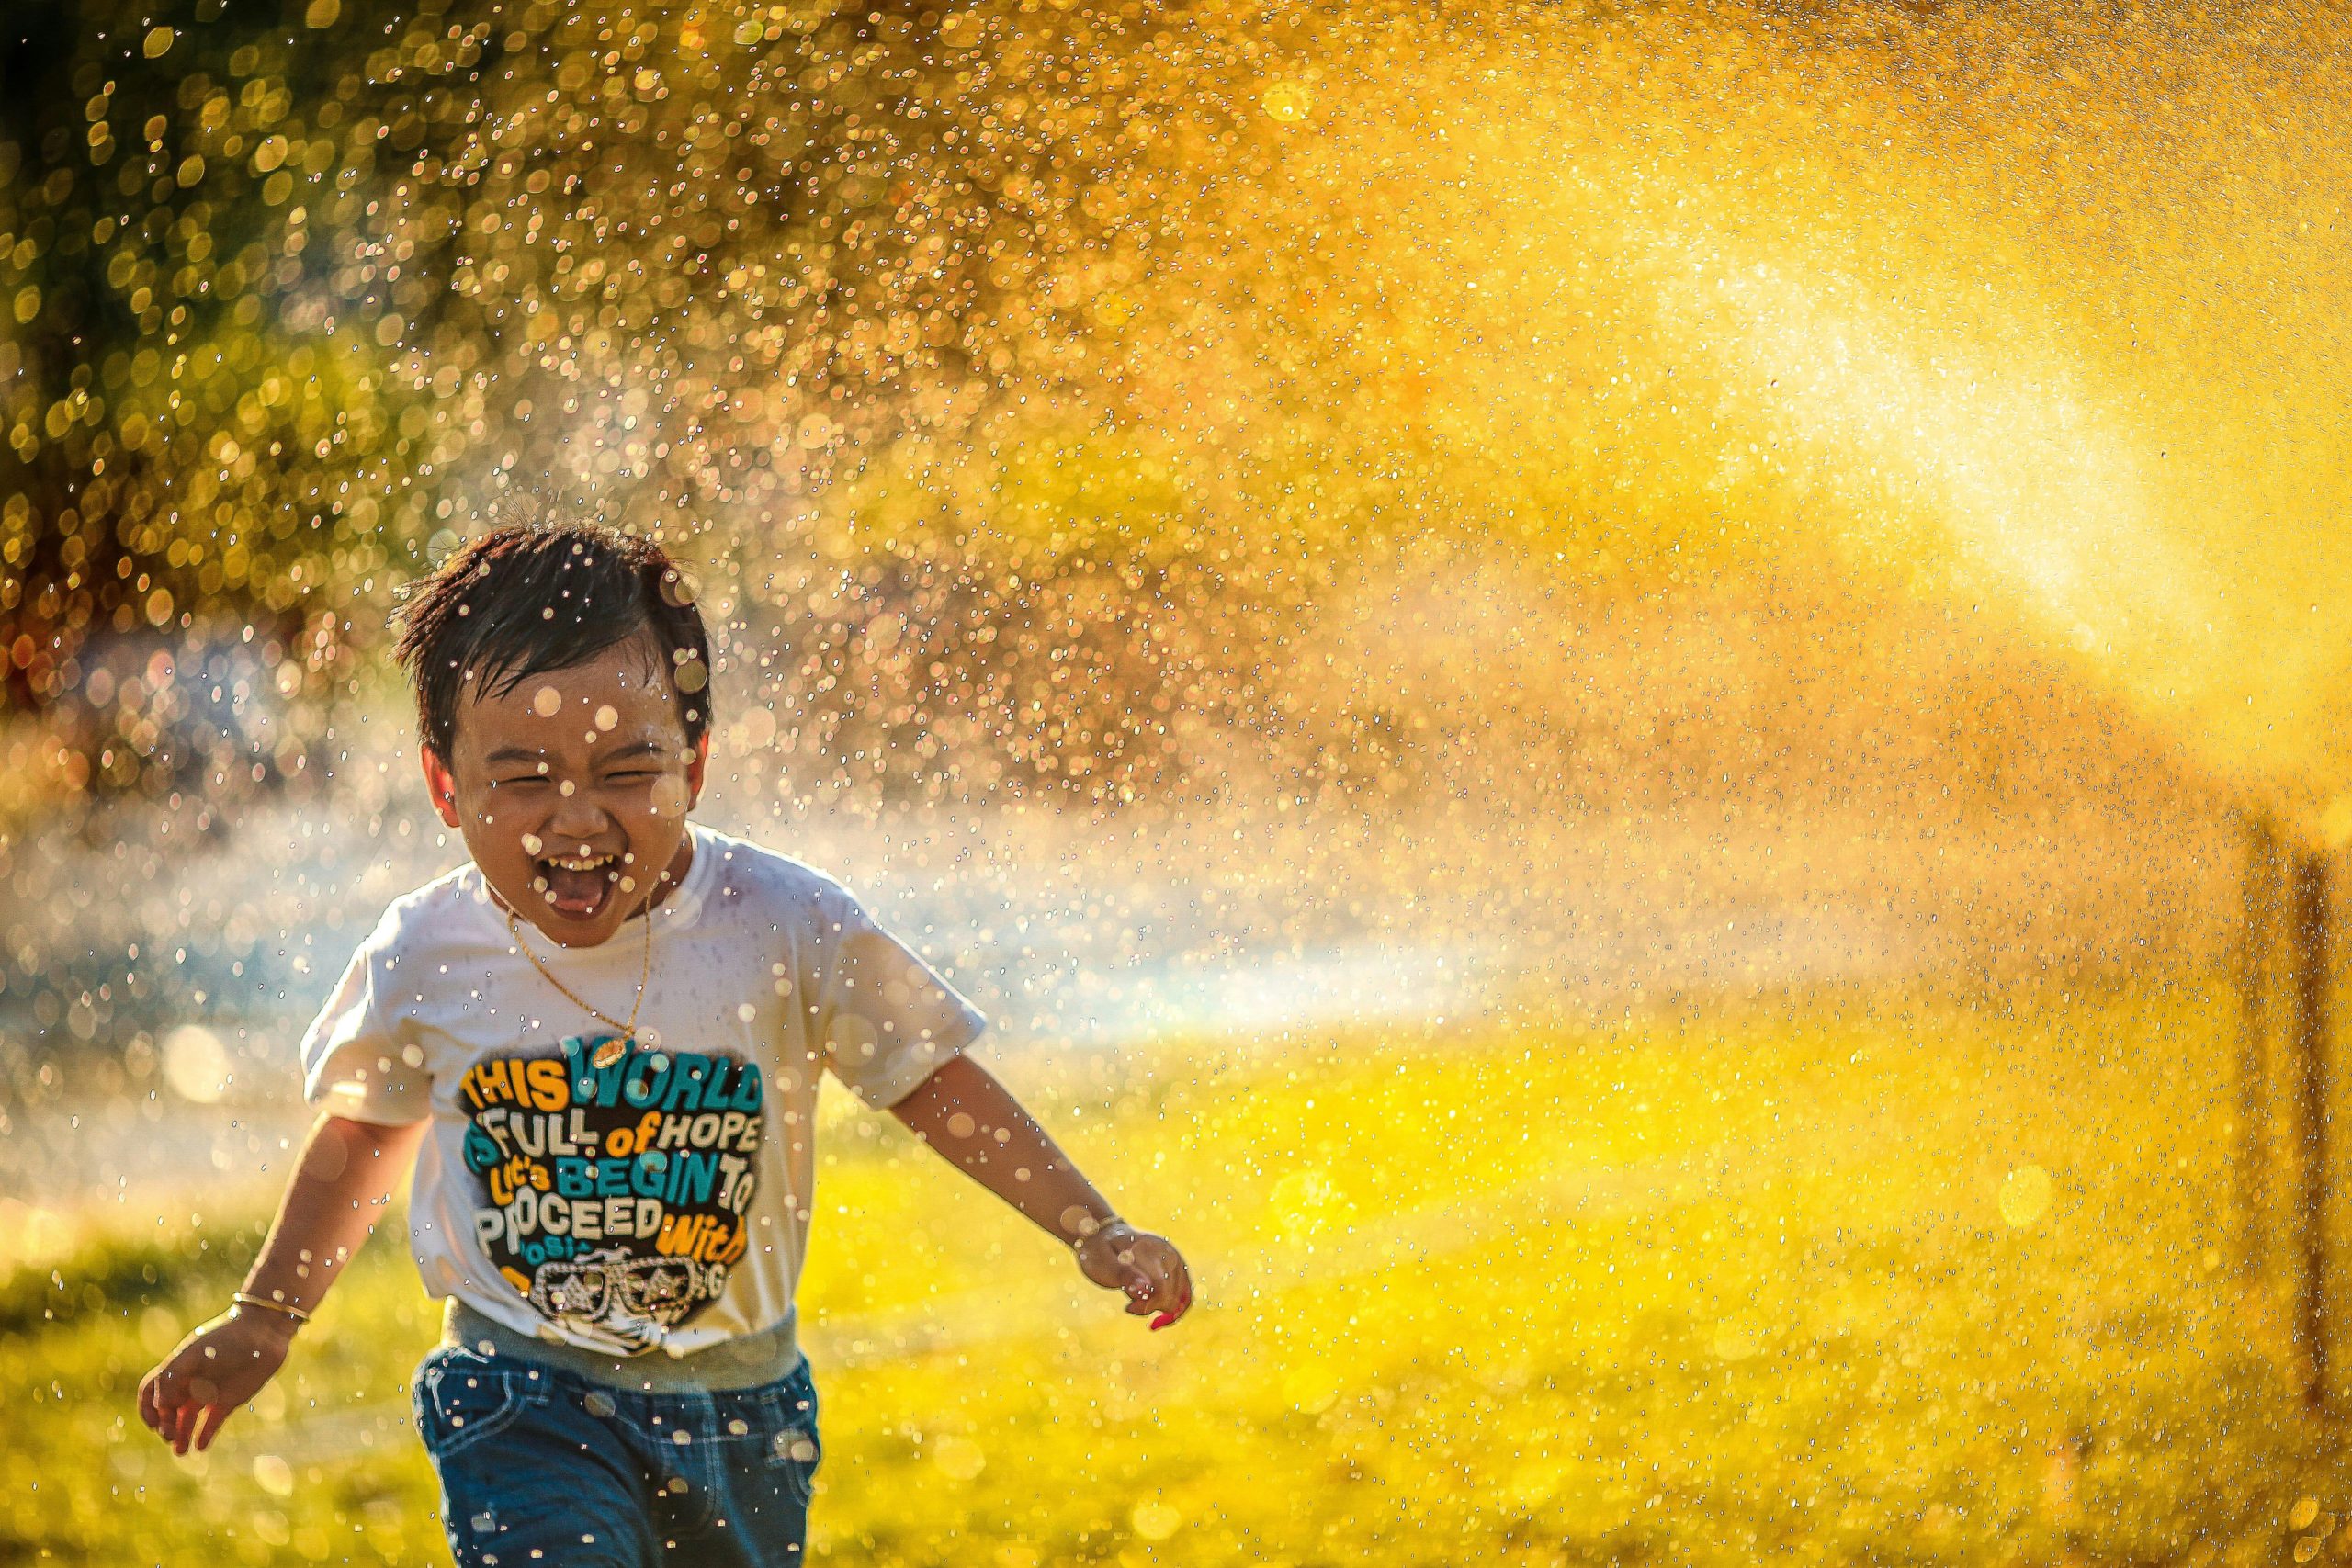 Foster child runs through sprinklers in the summer sunshine.